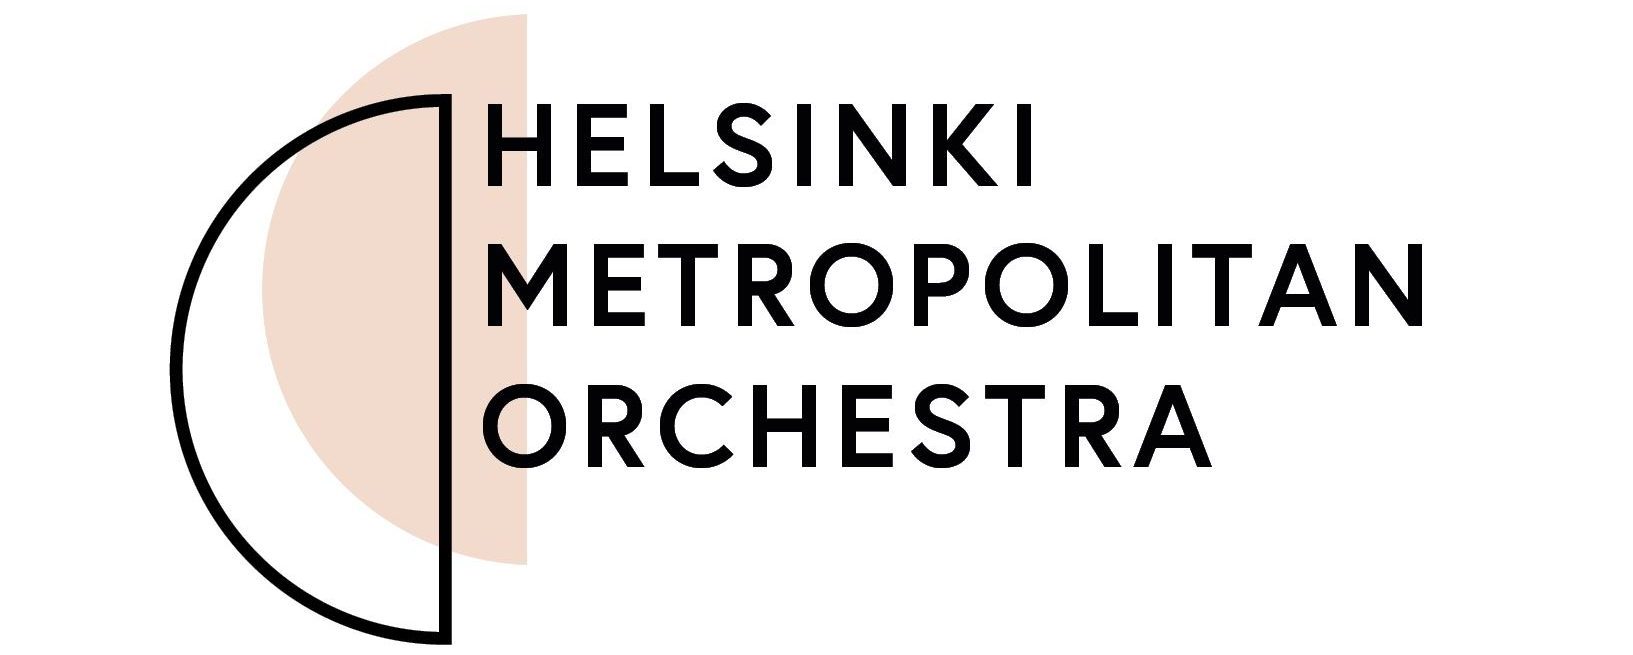 Helsinki Metropolitan Orchestra